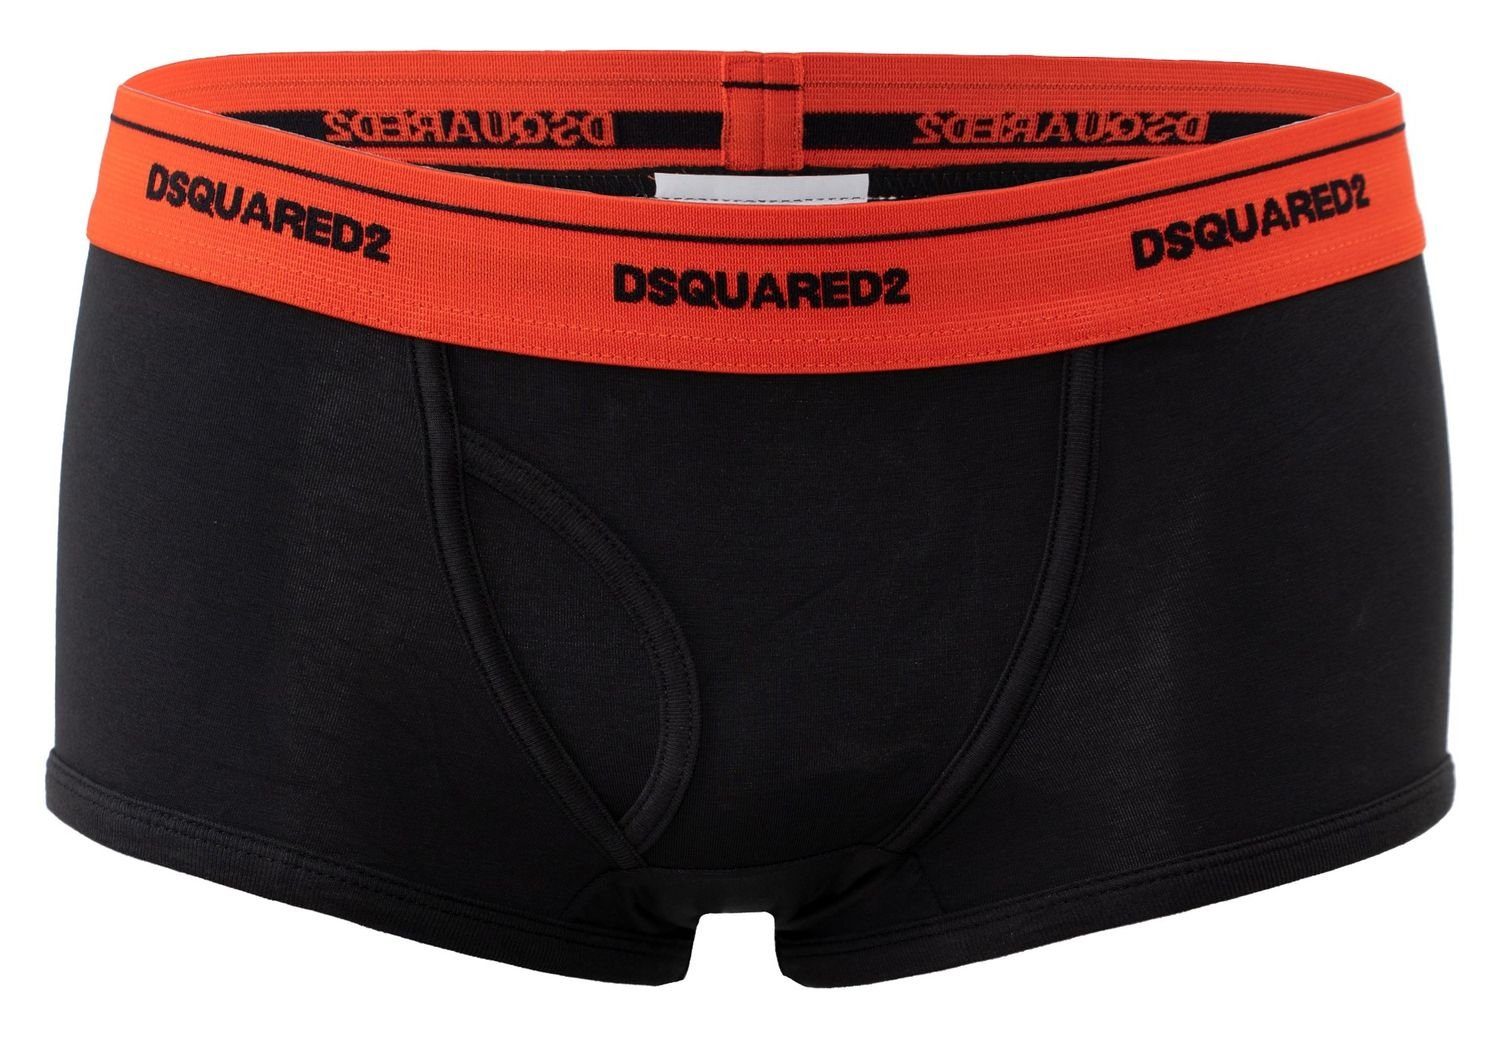 Dsquared2 Trunk »Dsquared2 Boxershorts / Pants / Shorts / Boxer in schwarz Größe  M / L / XL / XXL« (1 St) online kaufen | OTTO